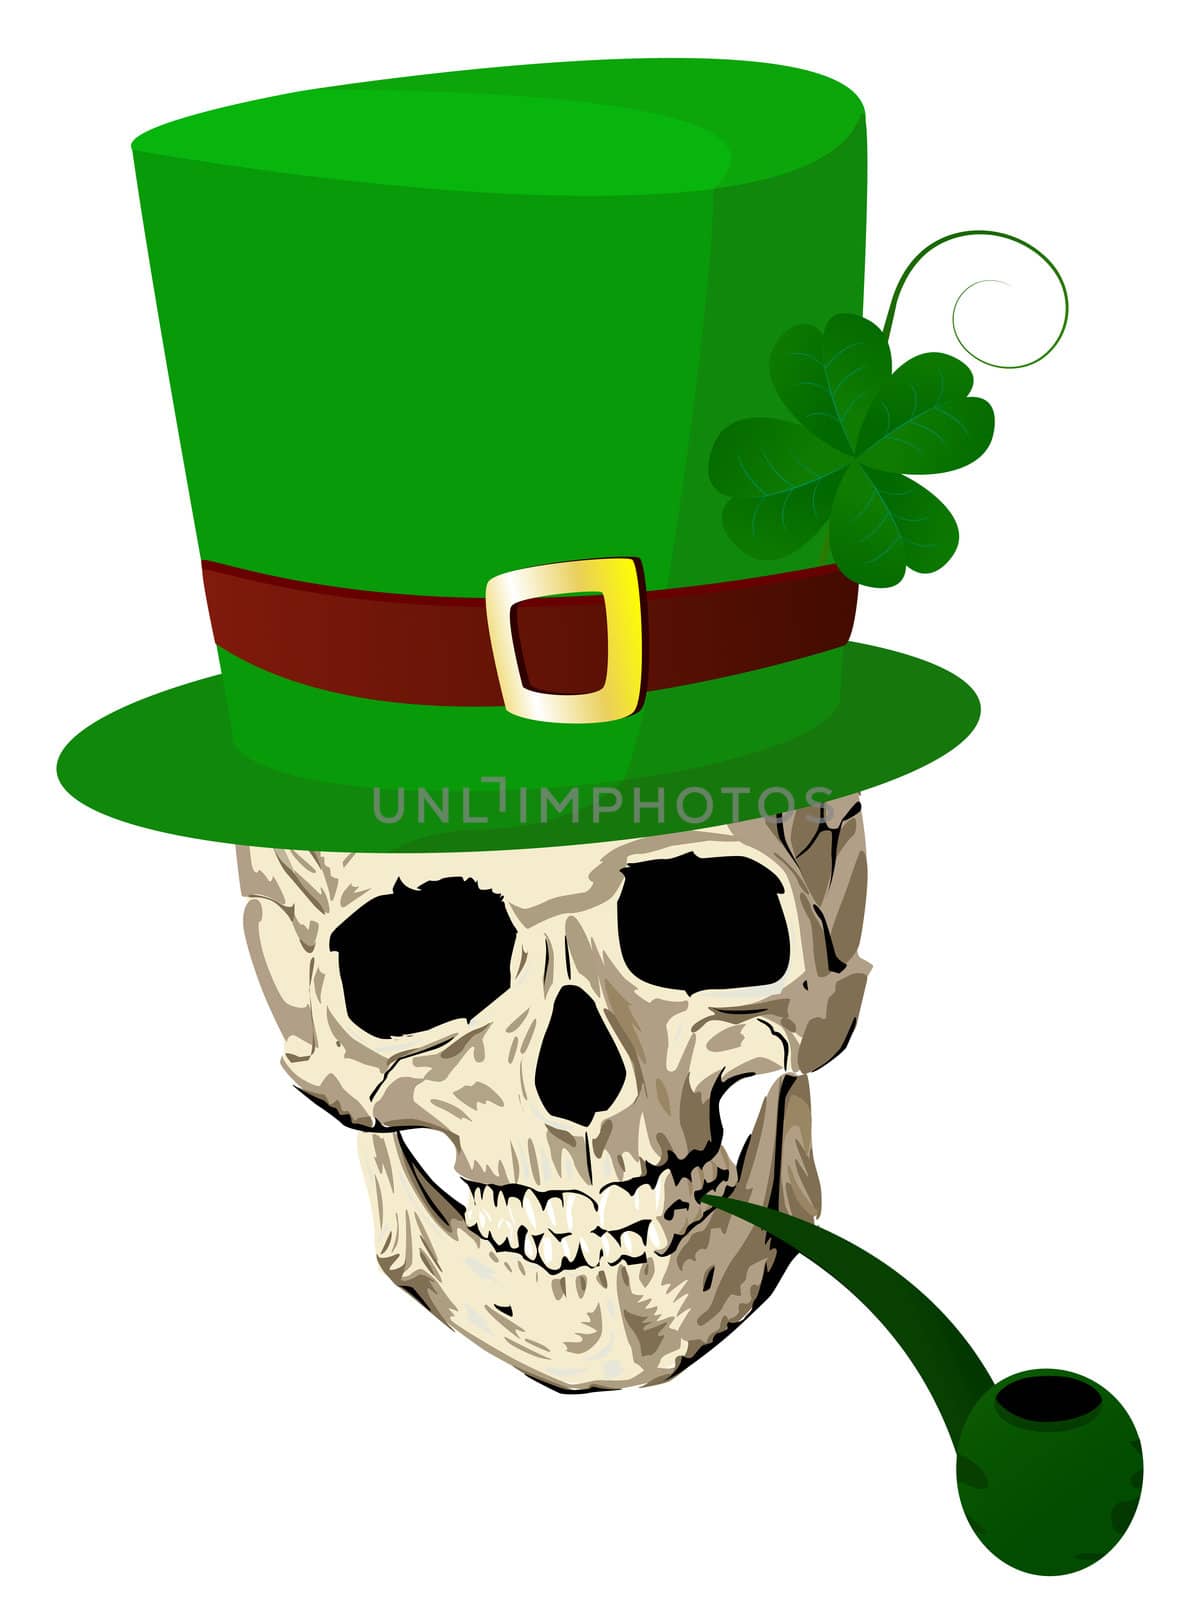 St.Patrick skull by Lirch